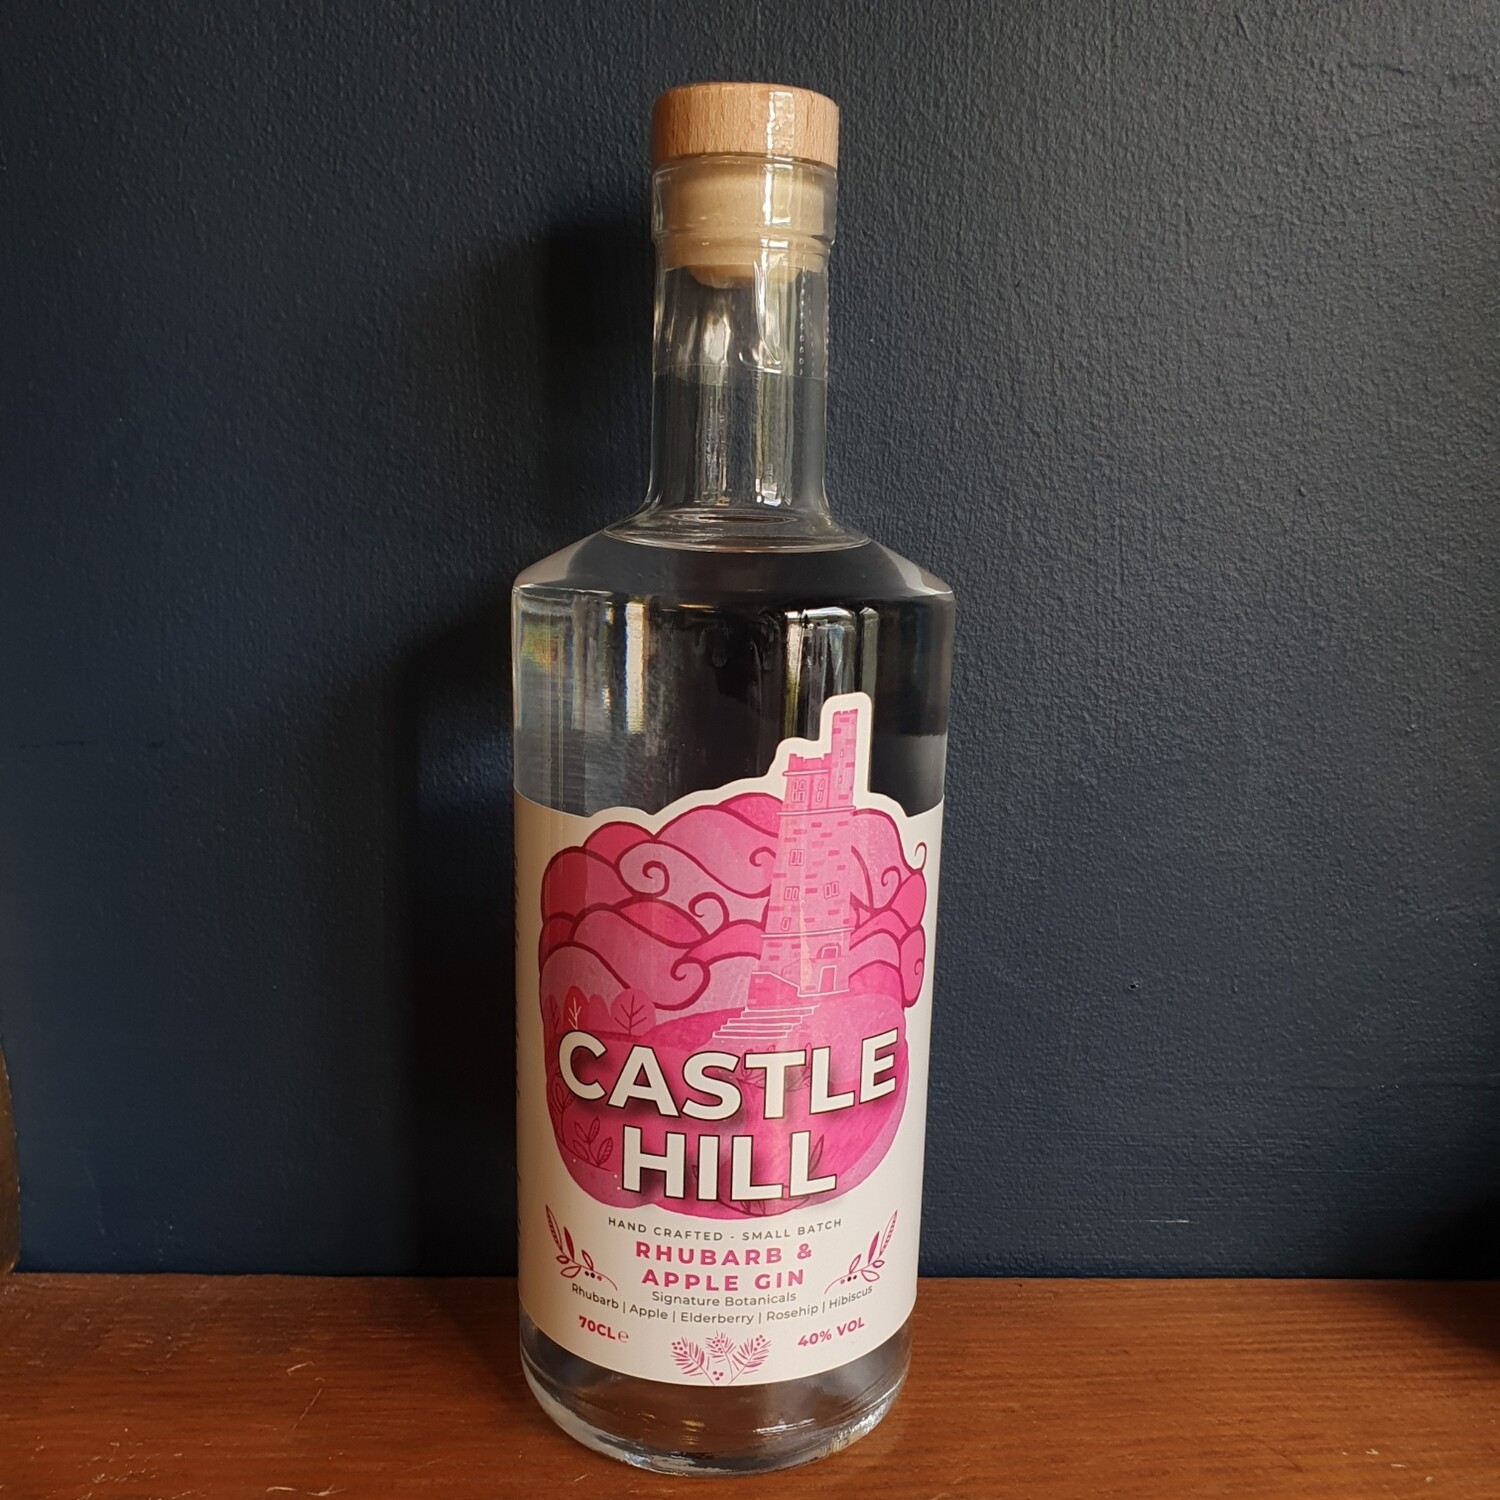 Castle Hill Rhubarb & Apple Gin (70cl)